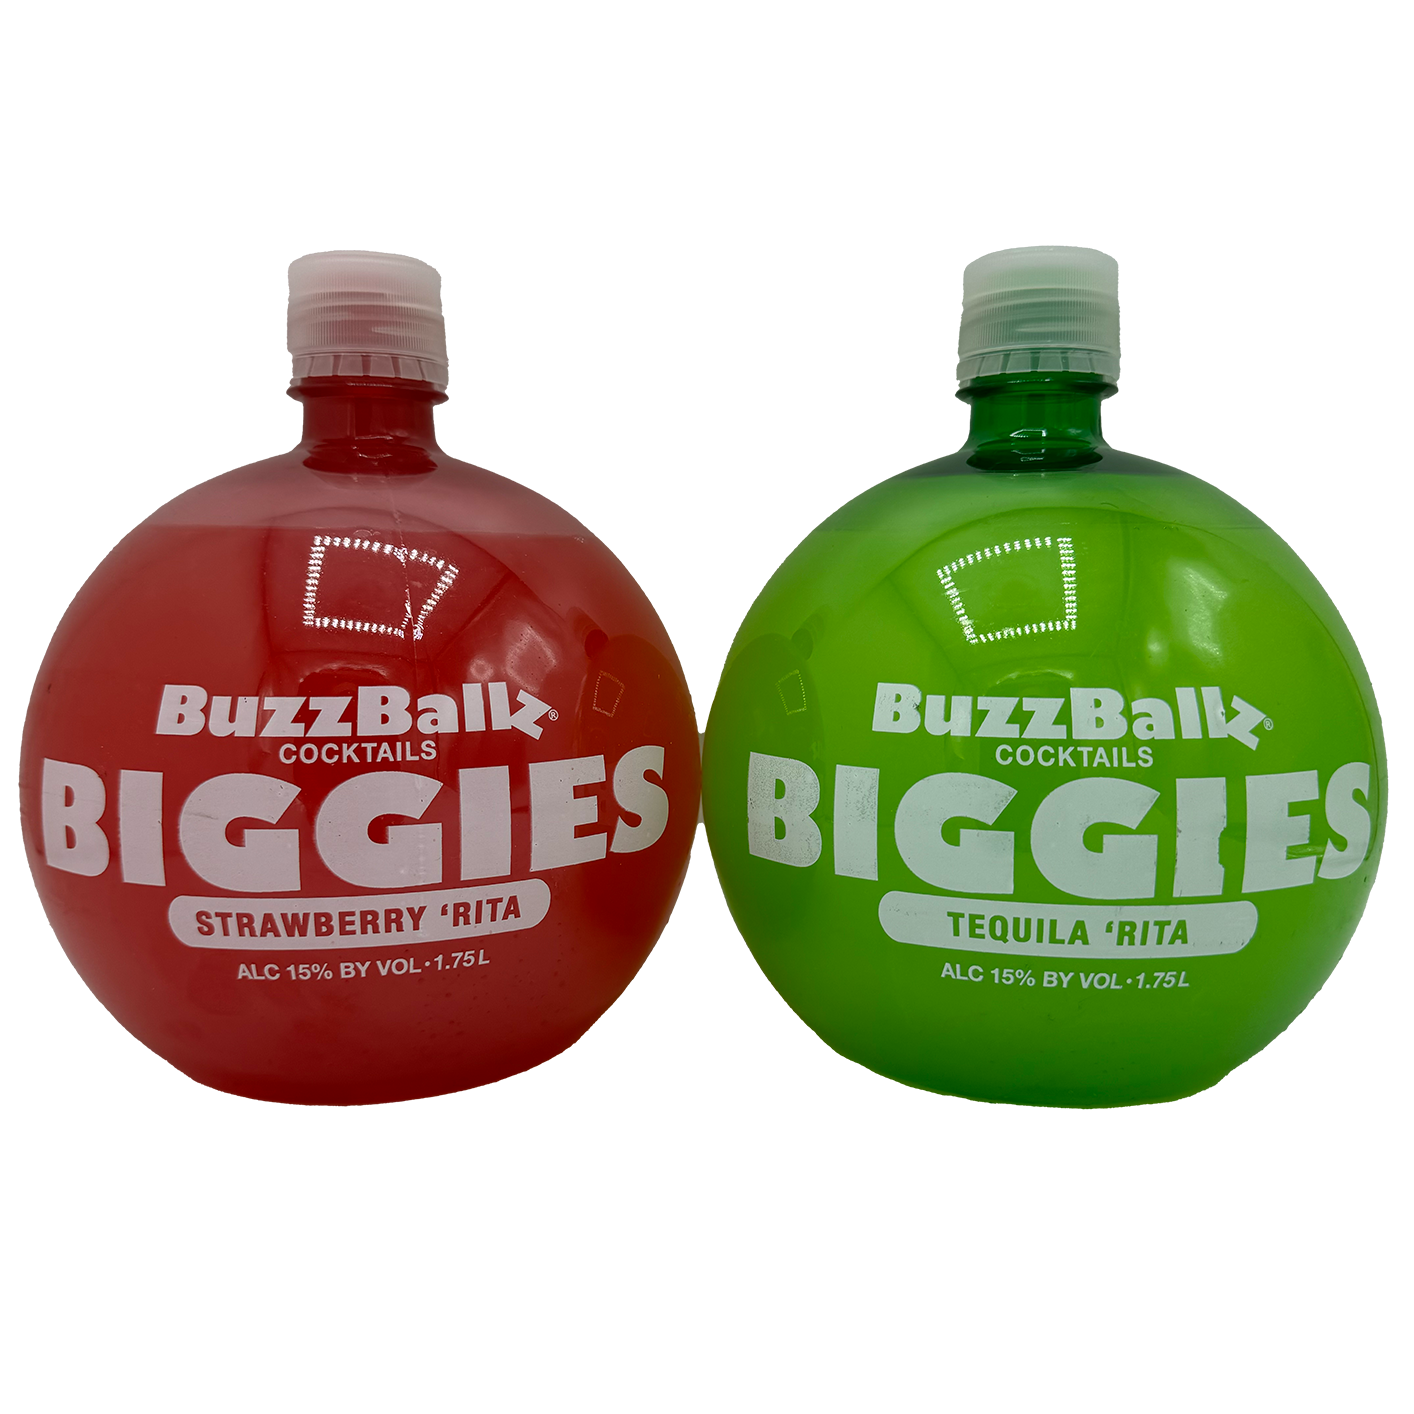 Buzzballs Biggies